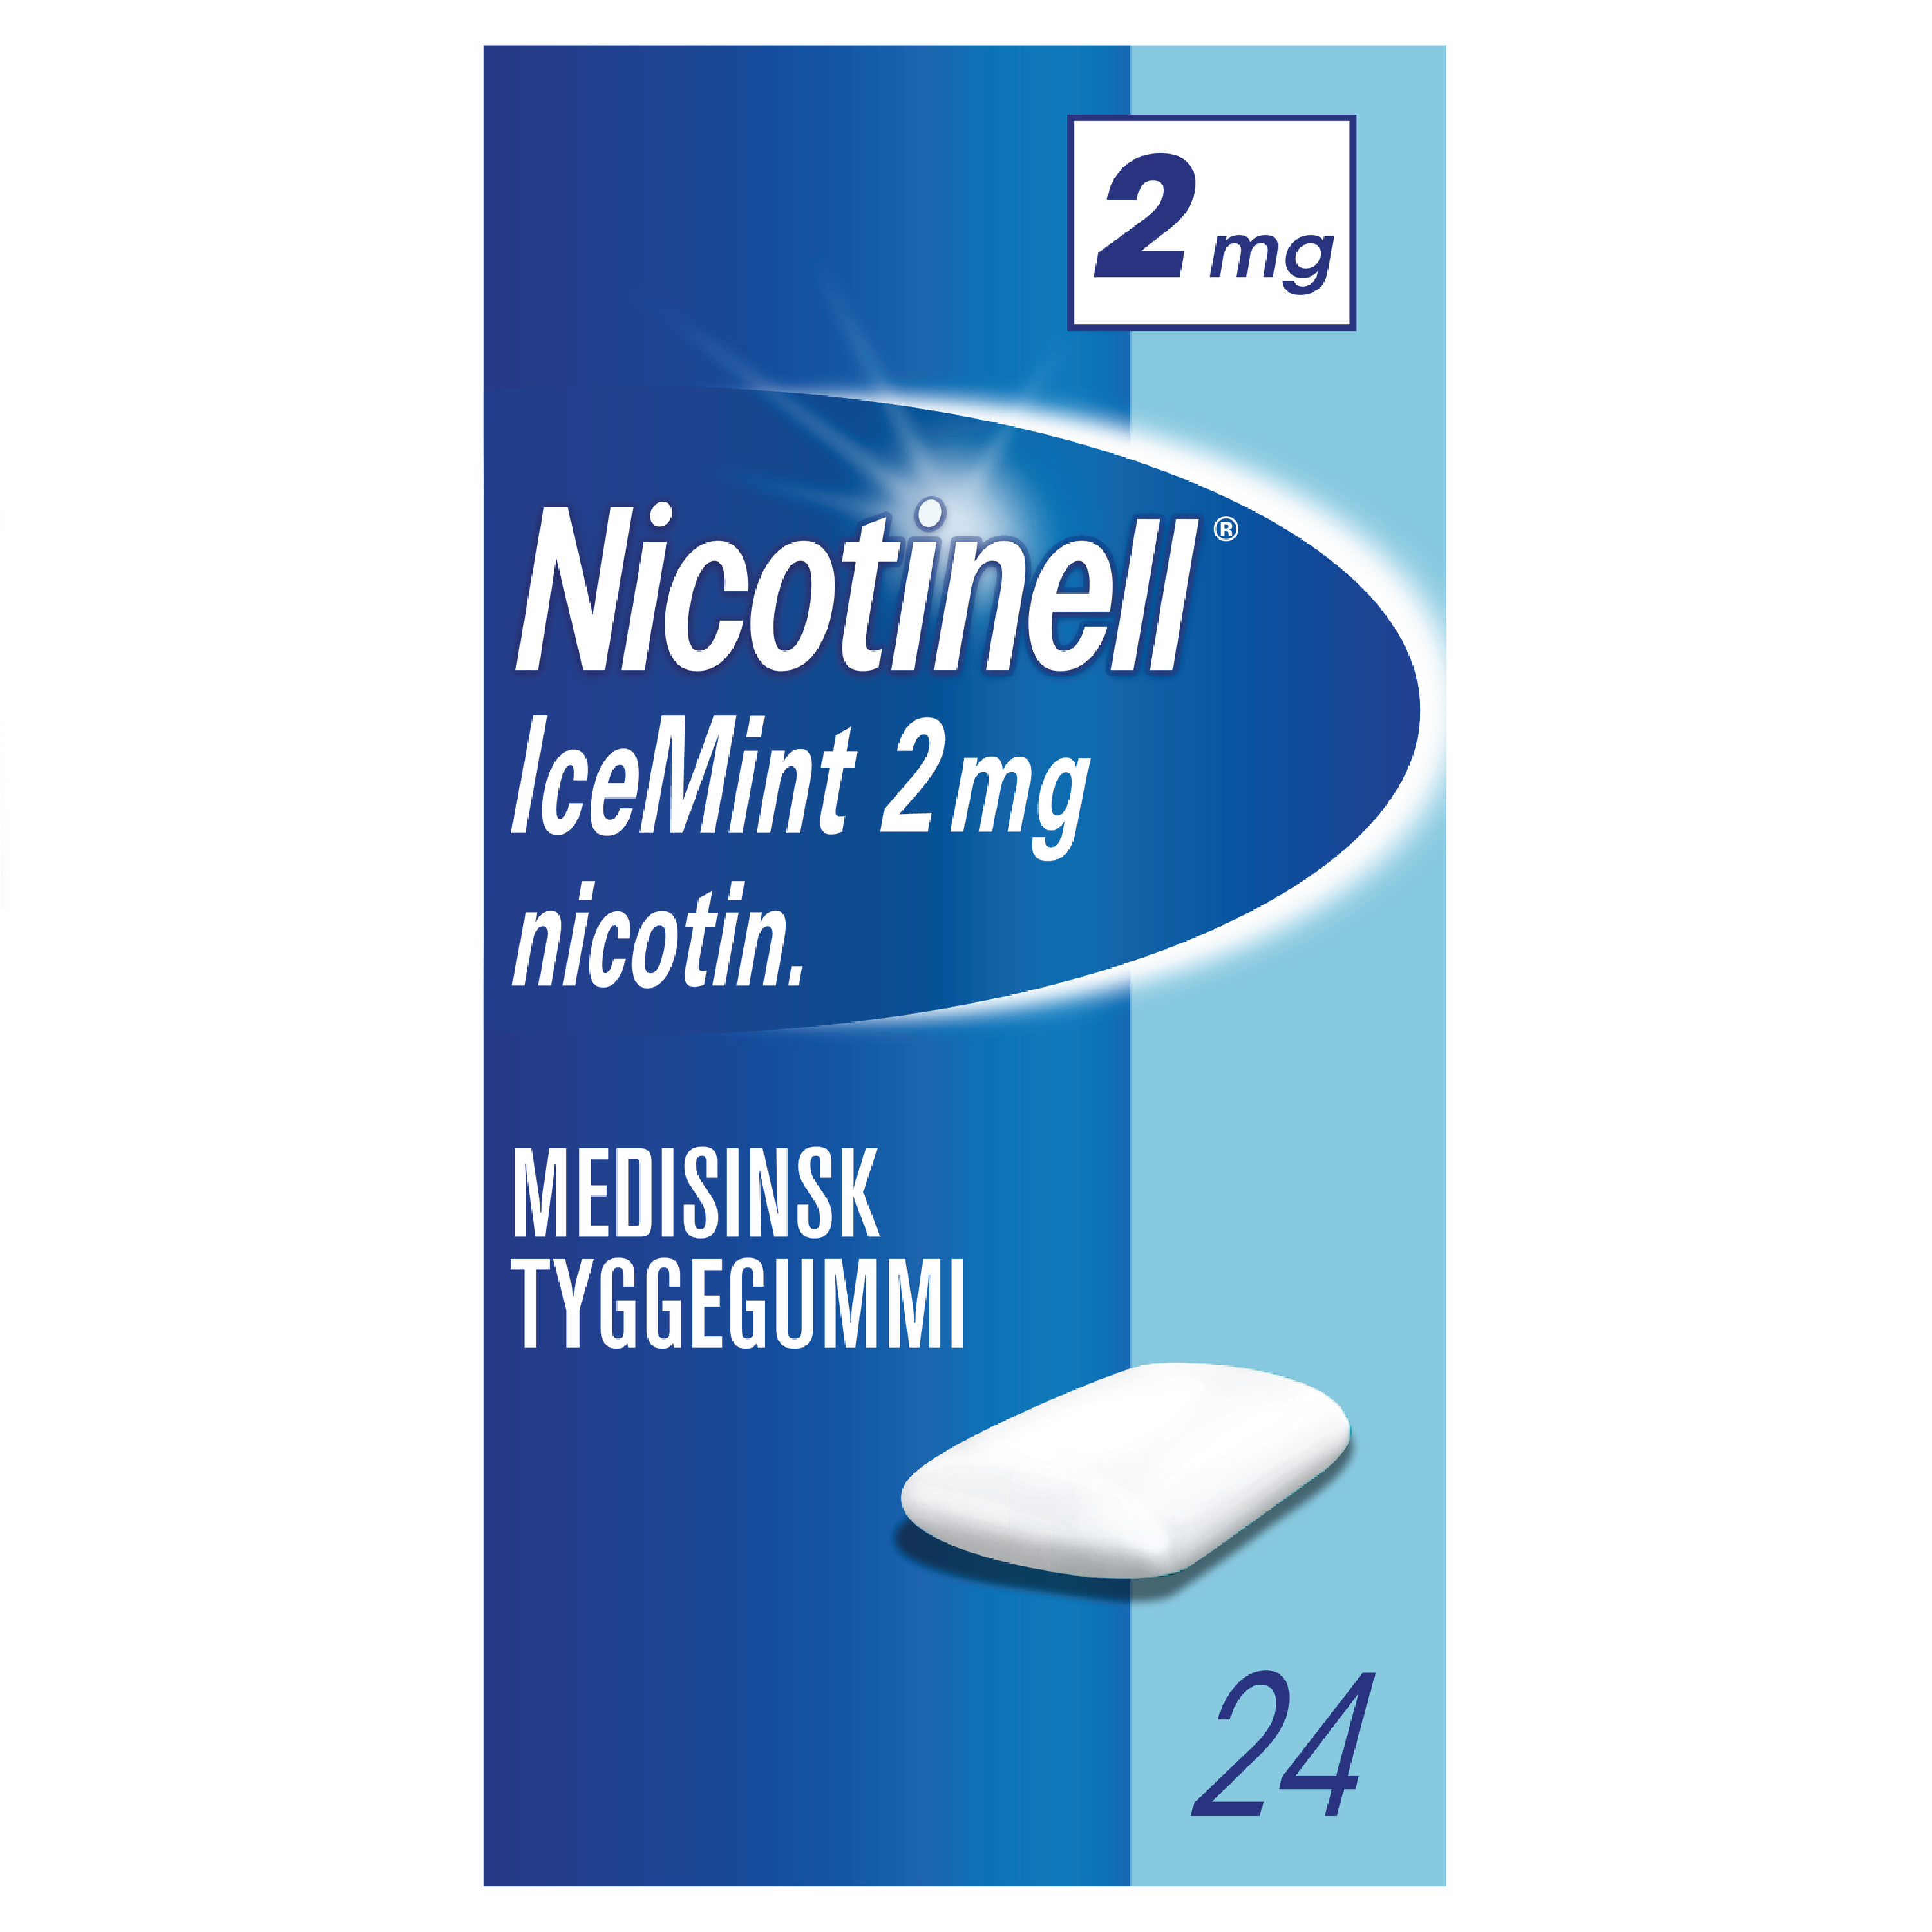 Nicotinell Tyggegummi 2mg icemint, 24 stk.